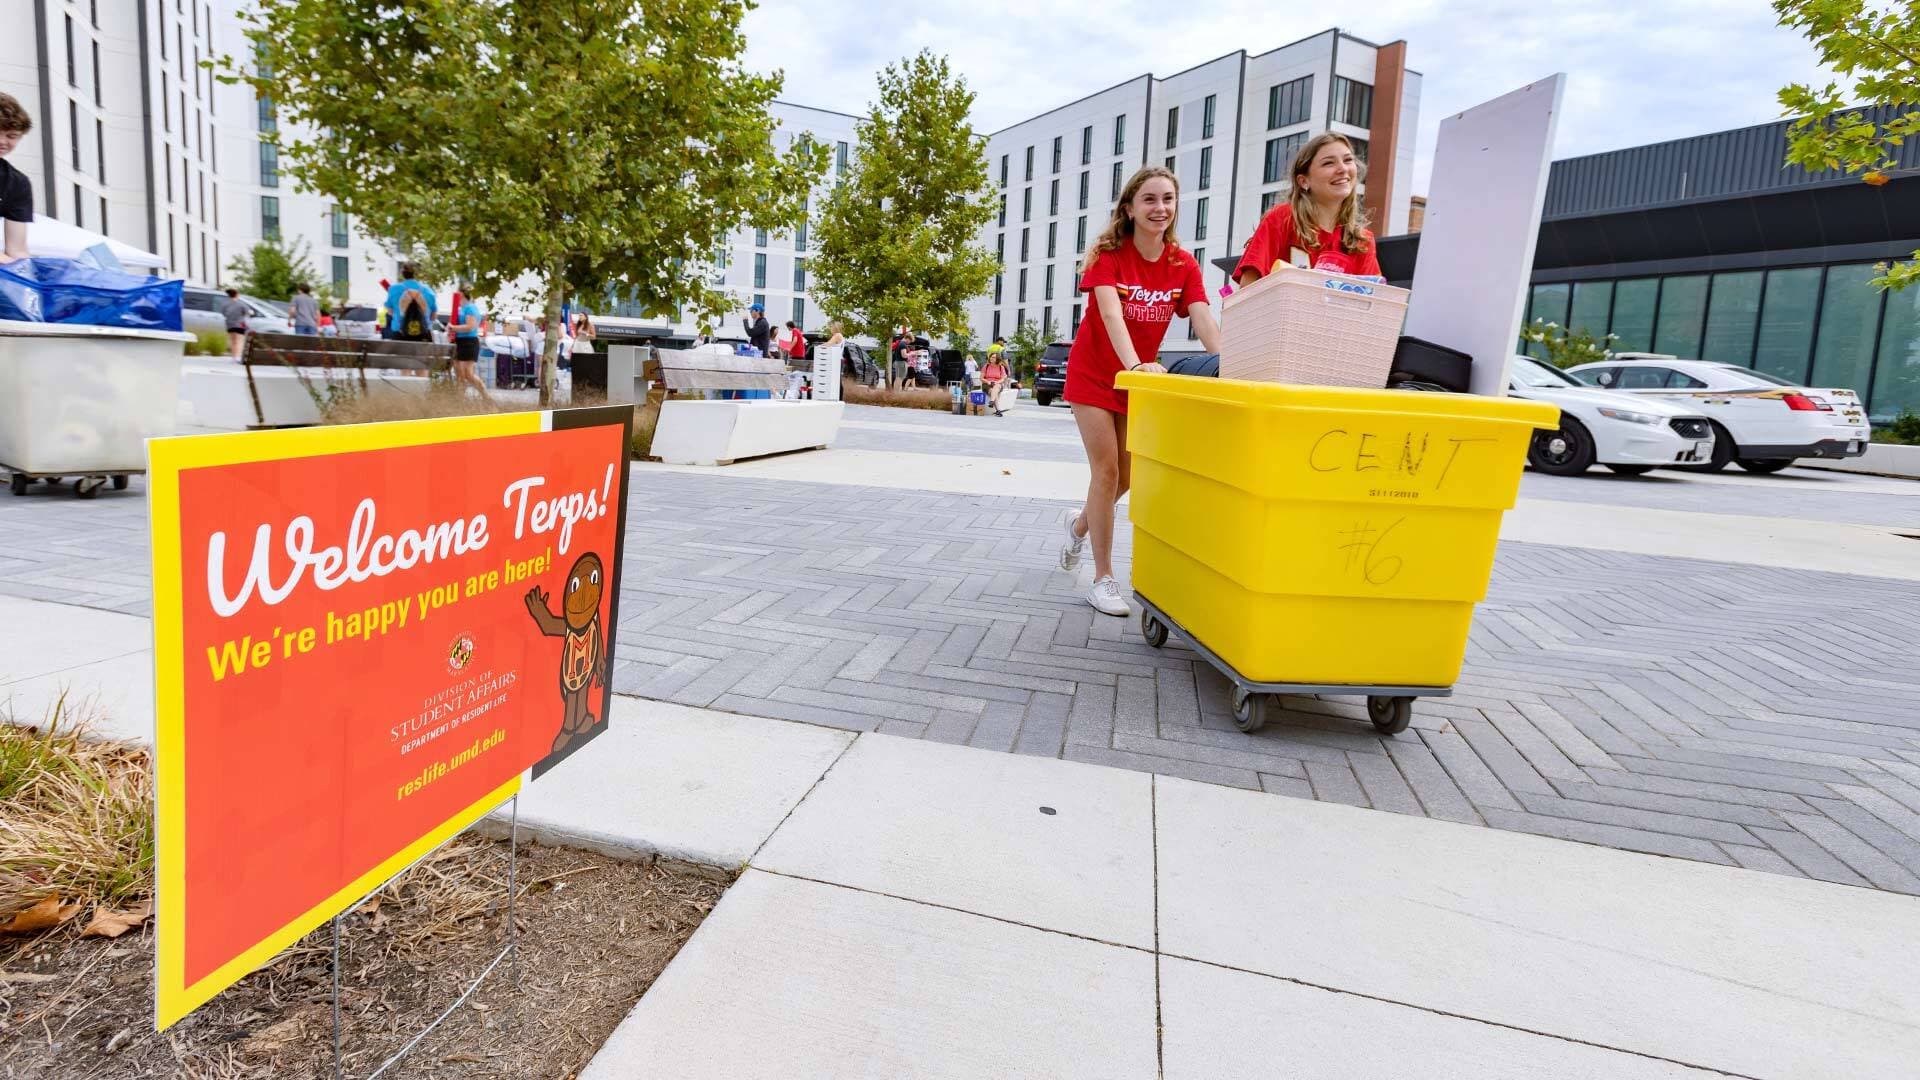 Two young women push a yellow moving cart